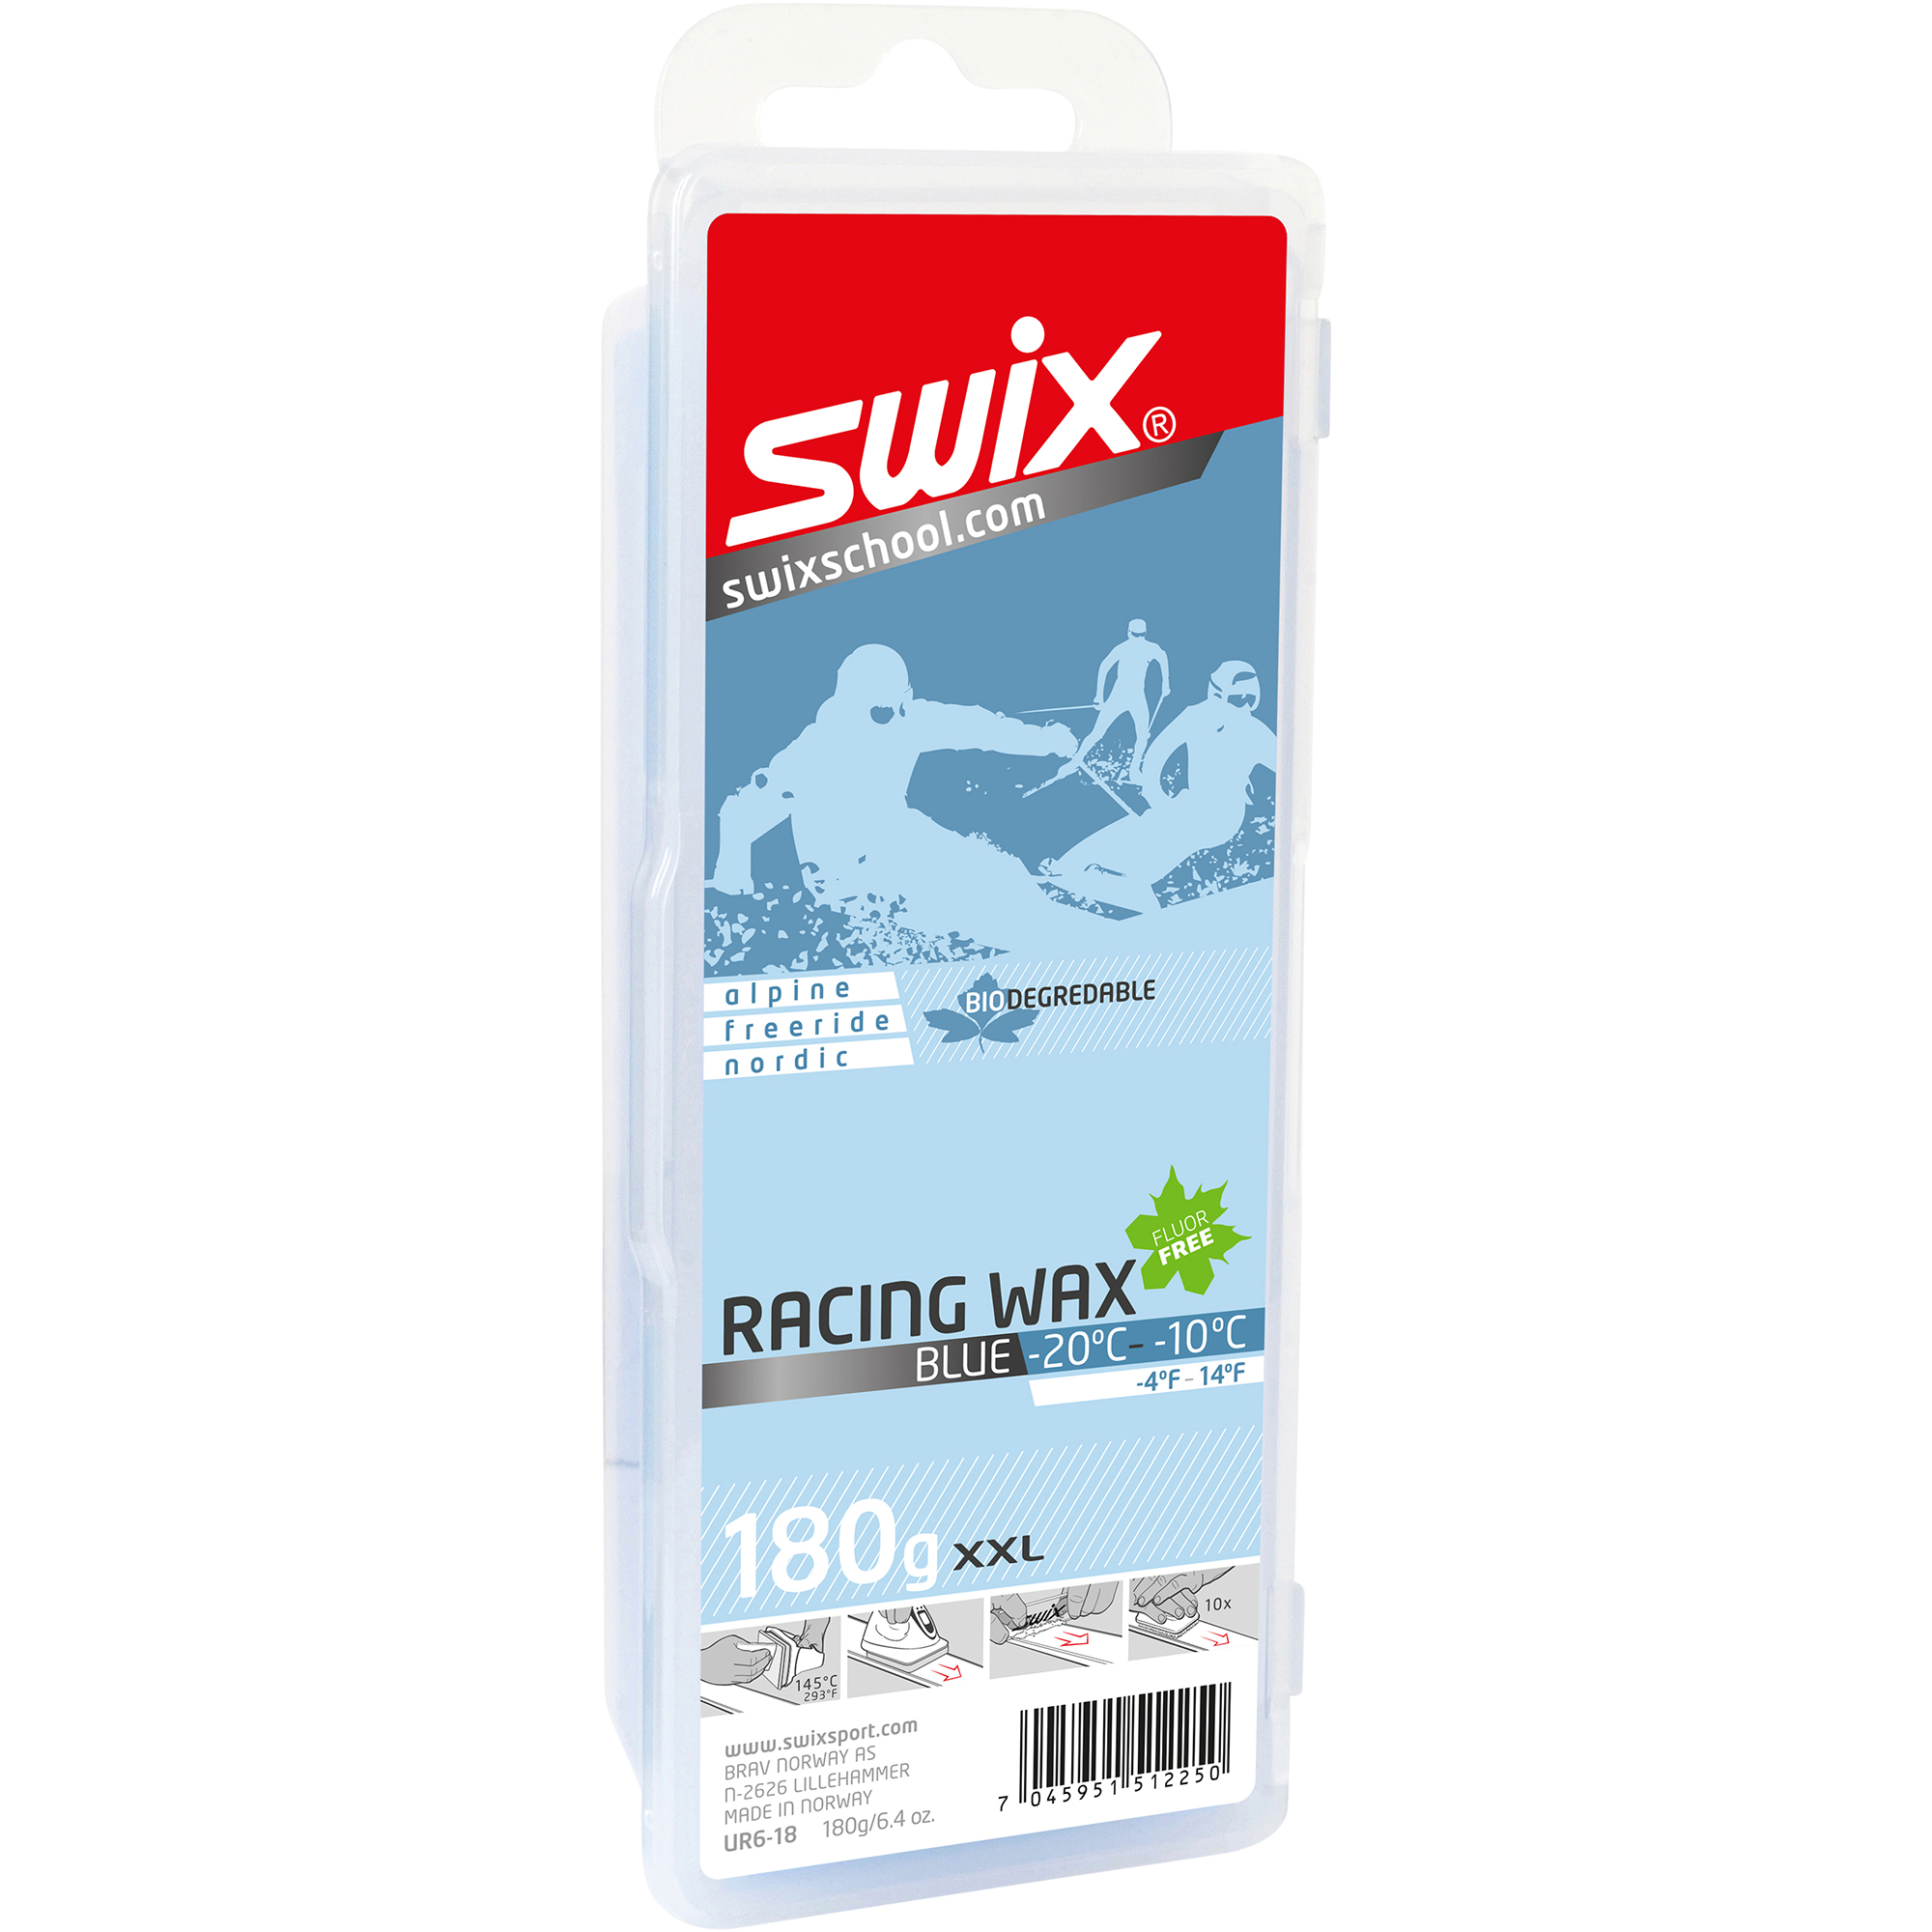 SWIX UR6 Bio Racing Wax Blue, 180g